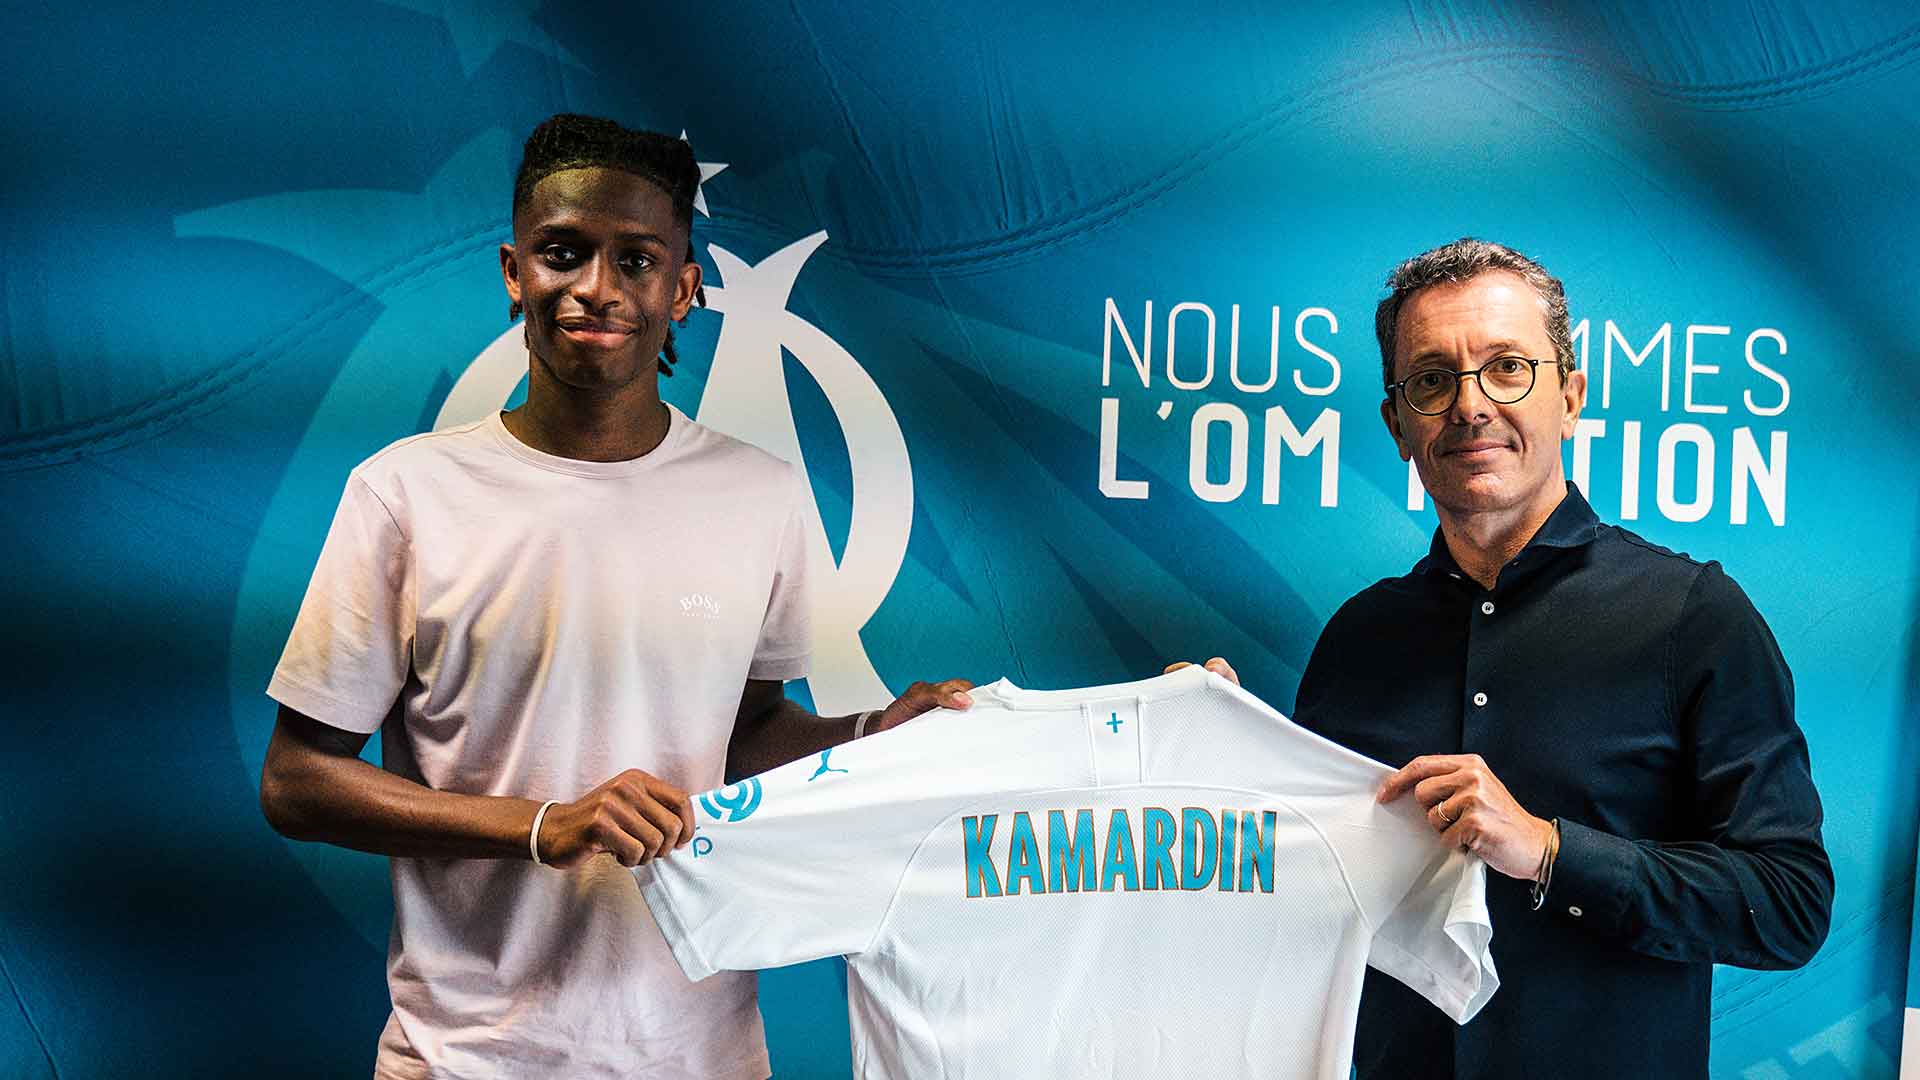 Aaron Kamardin, OM | Premier contrat professionnel pour Aaron Kamardin, Comoros Football 269 | Portail du football des Comores